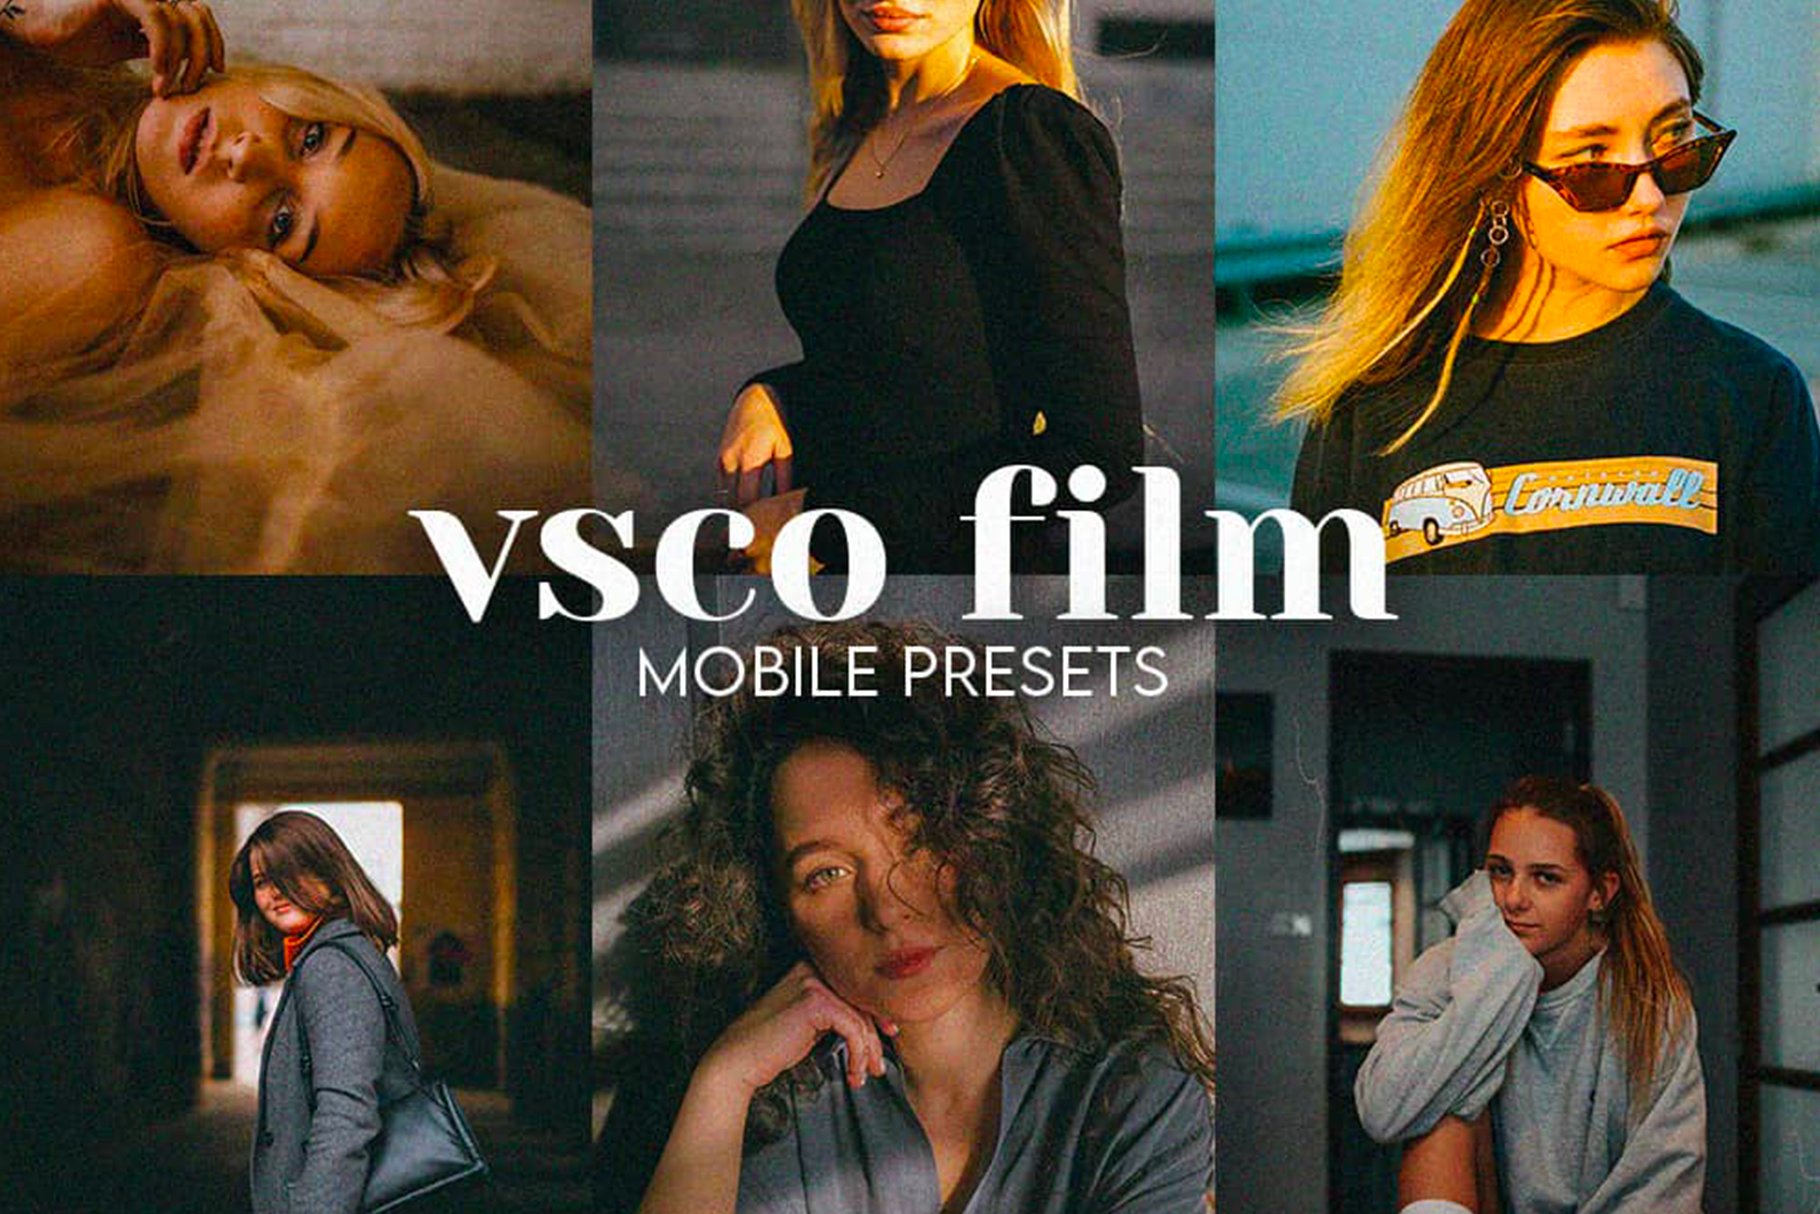 VSCO Film Lightroom Mobile Presetscover image.